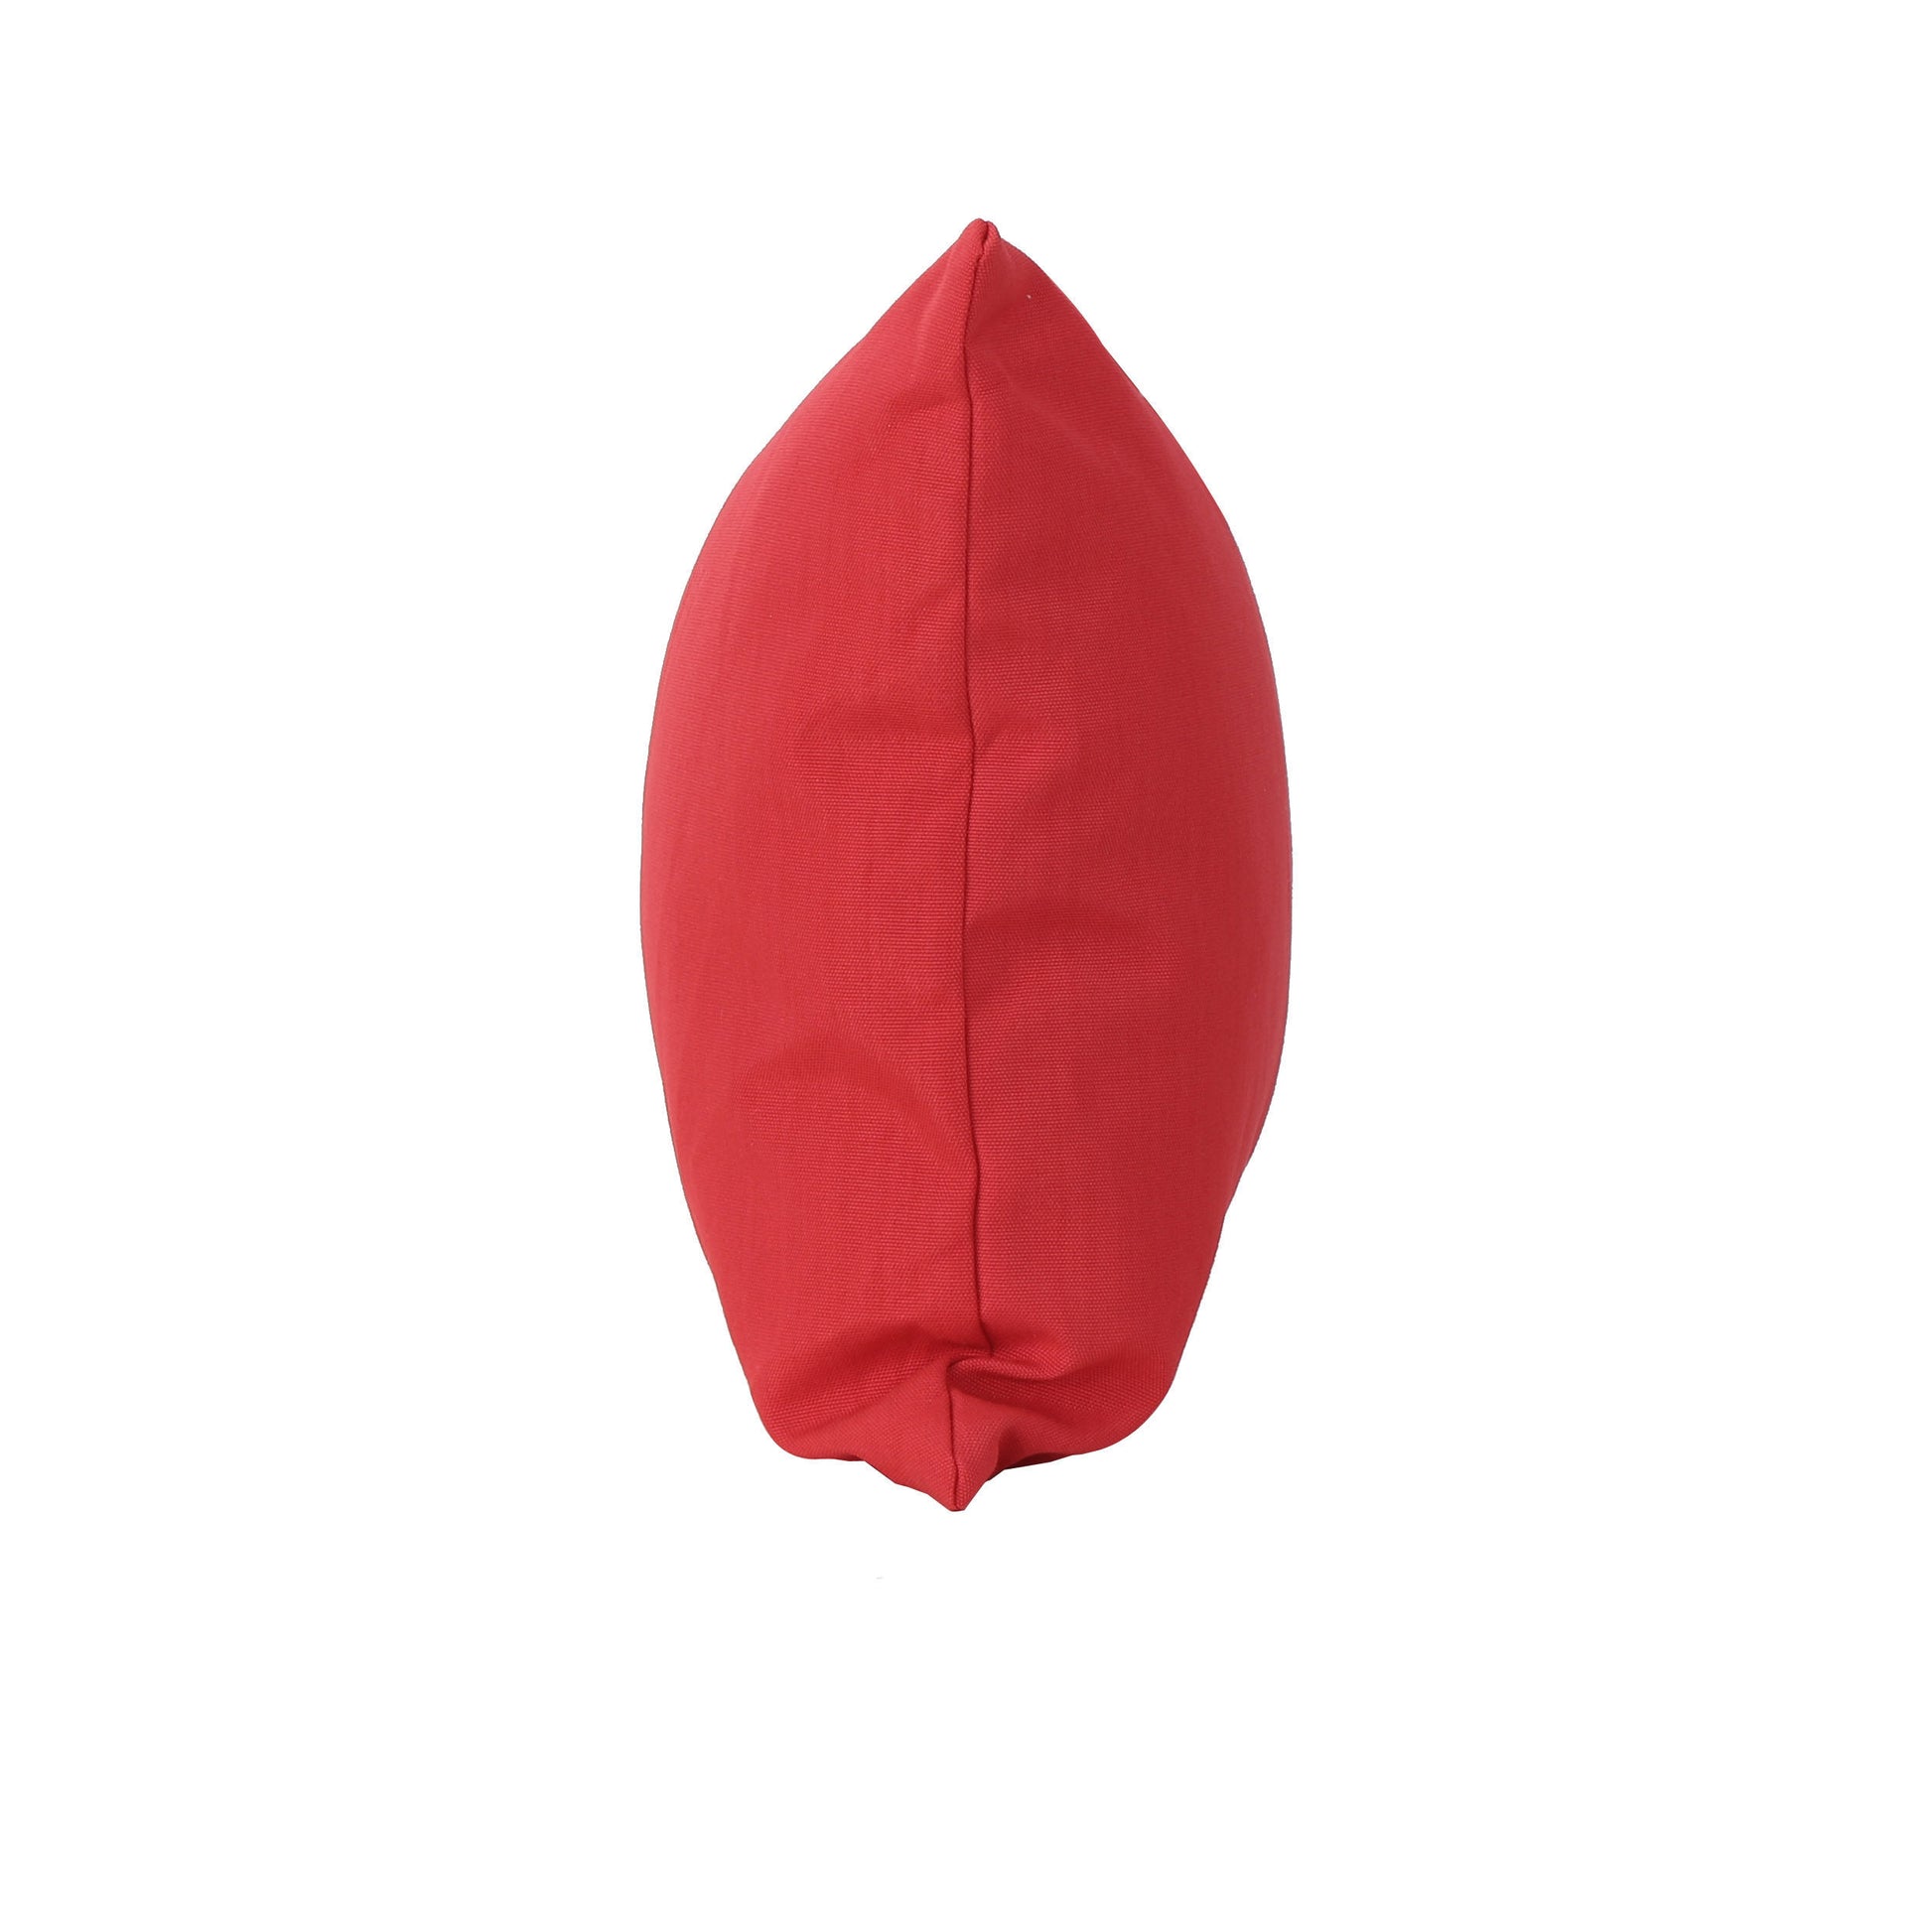 CORONADO RECTANGULAR PILLOW red-fabric